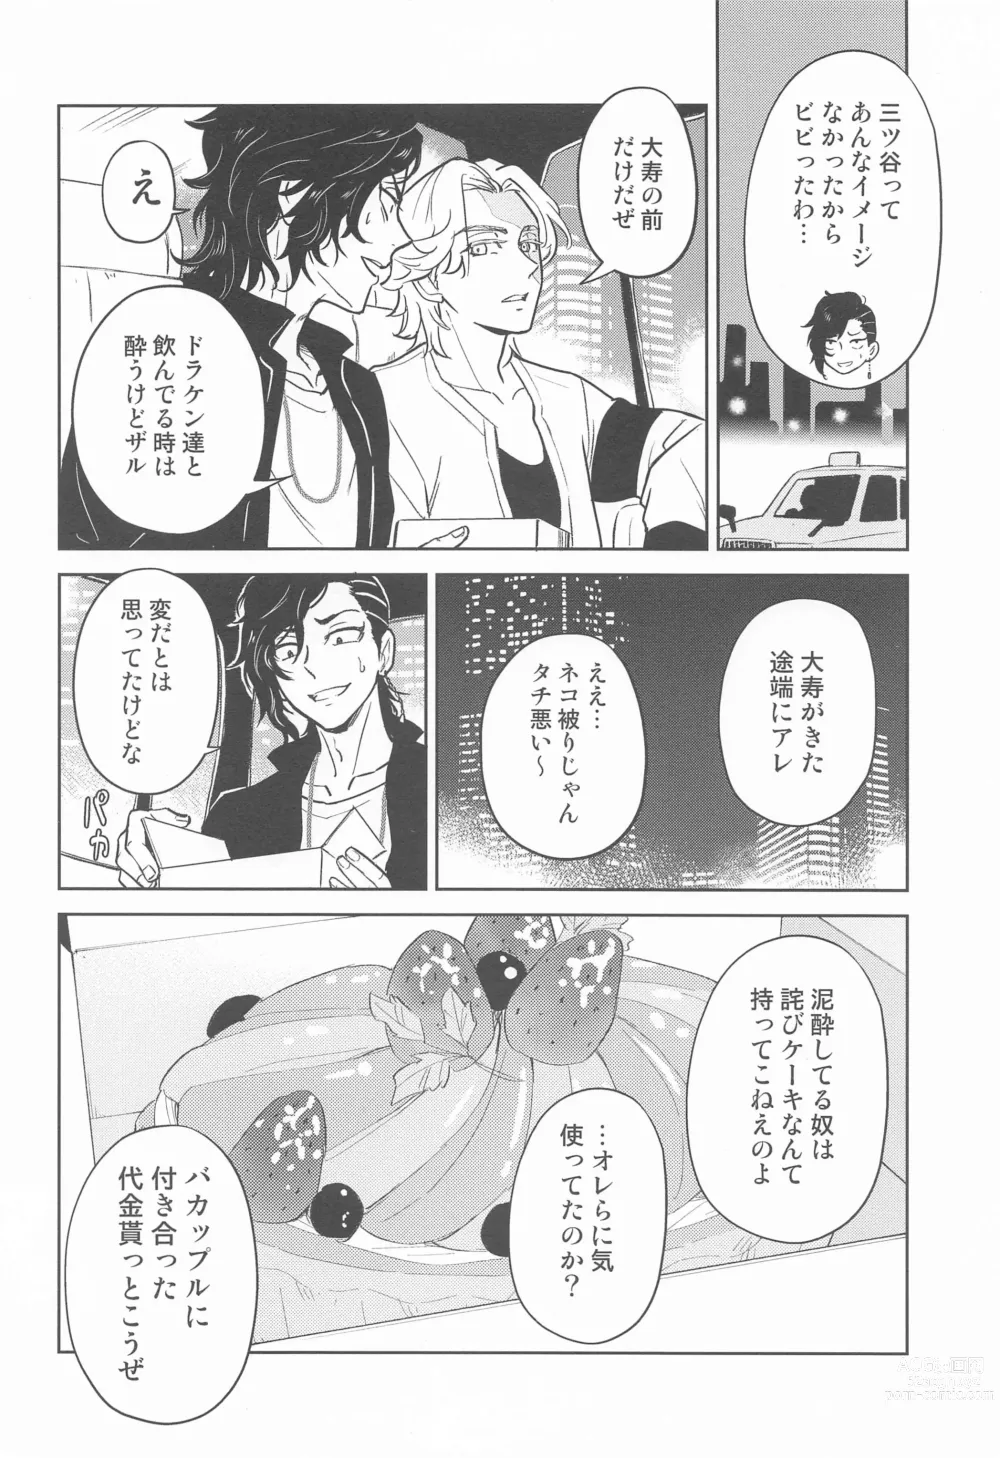 Page 23 of doujinshi BLACK LABEL